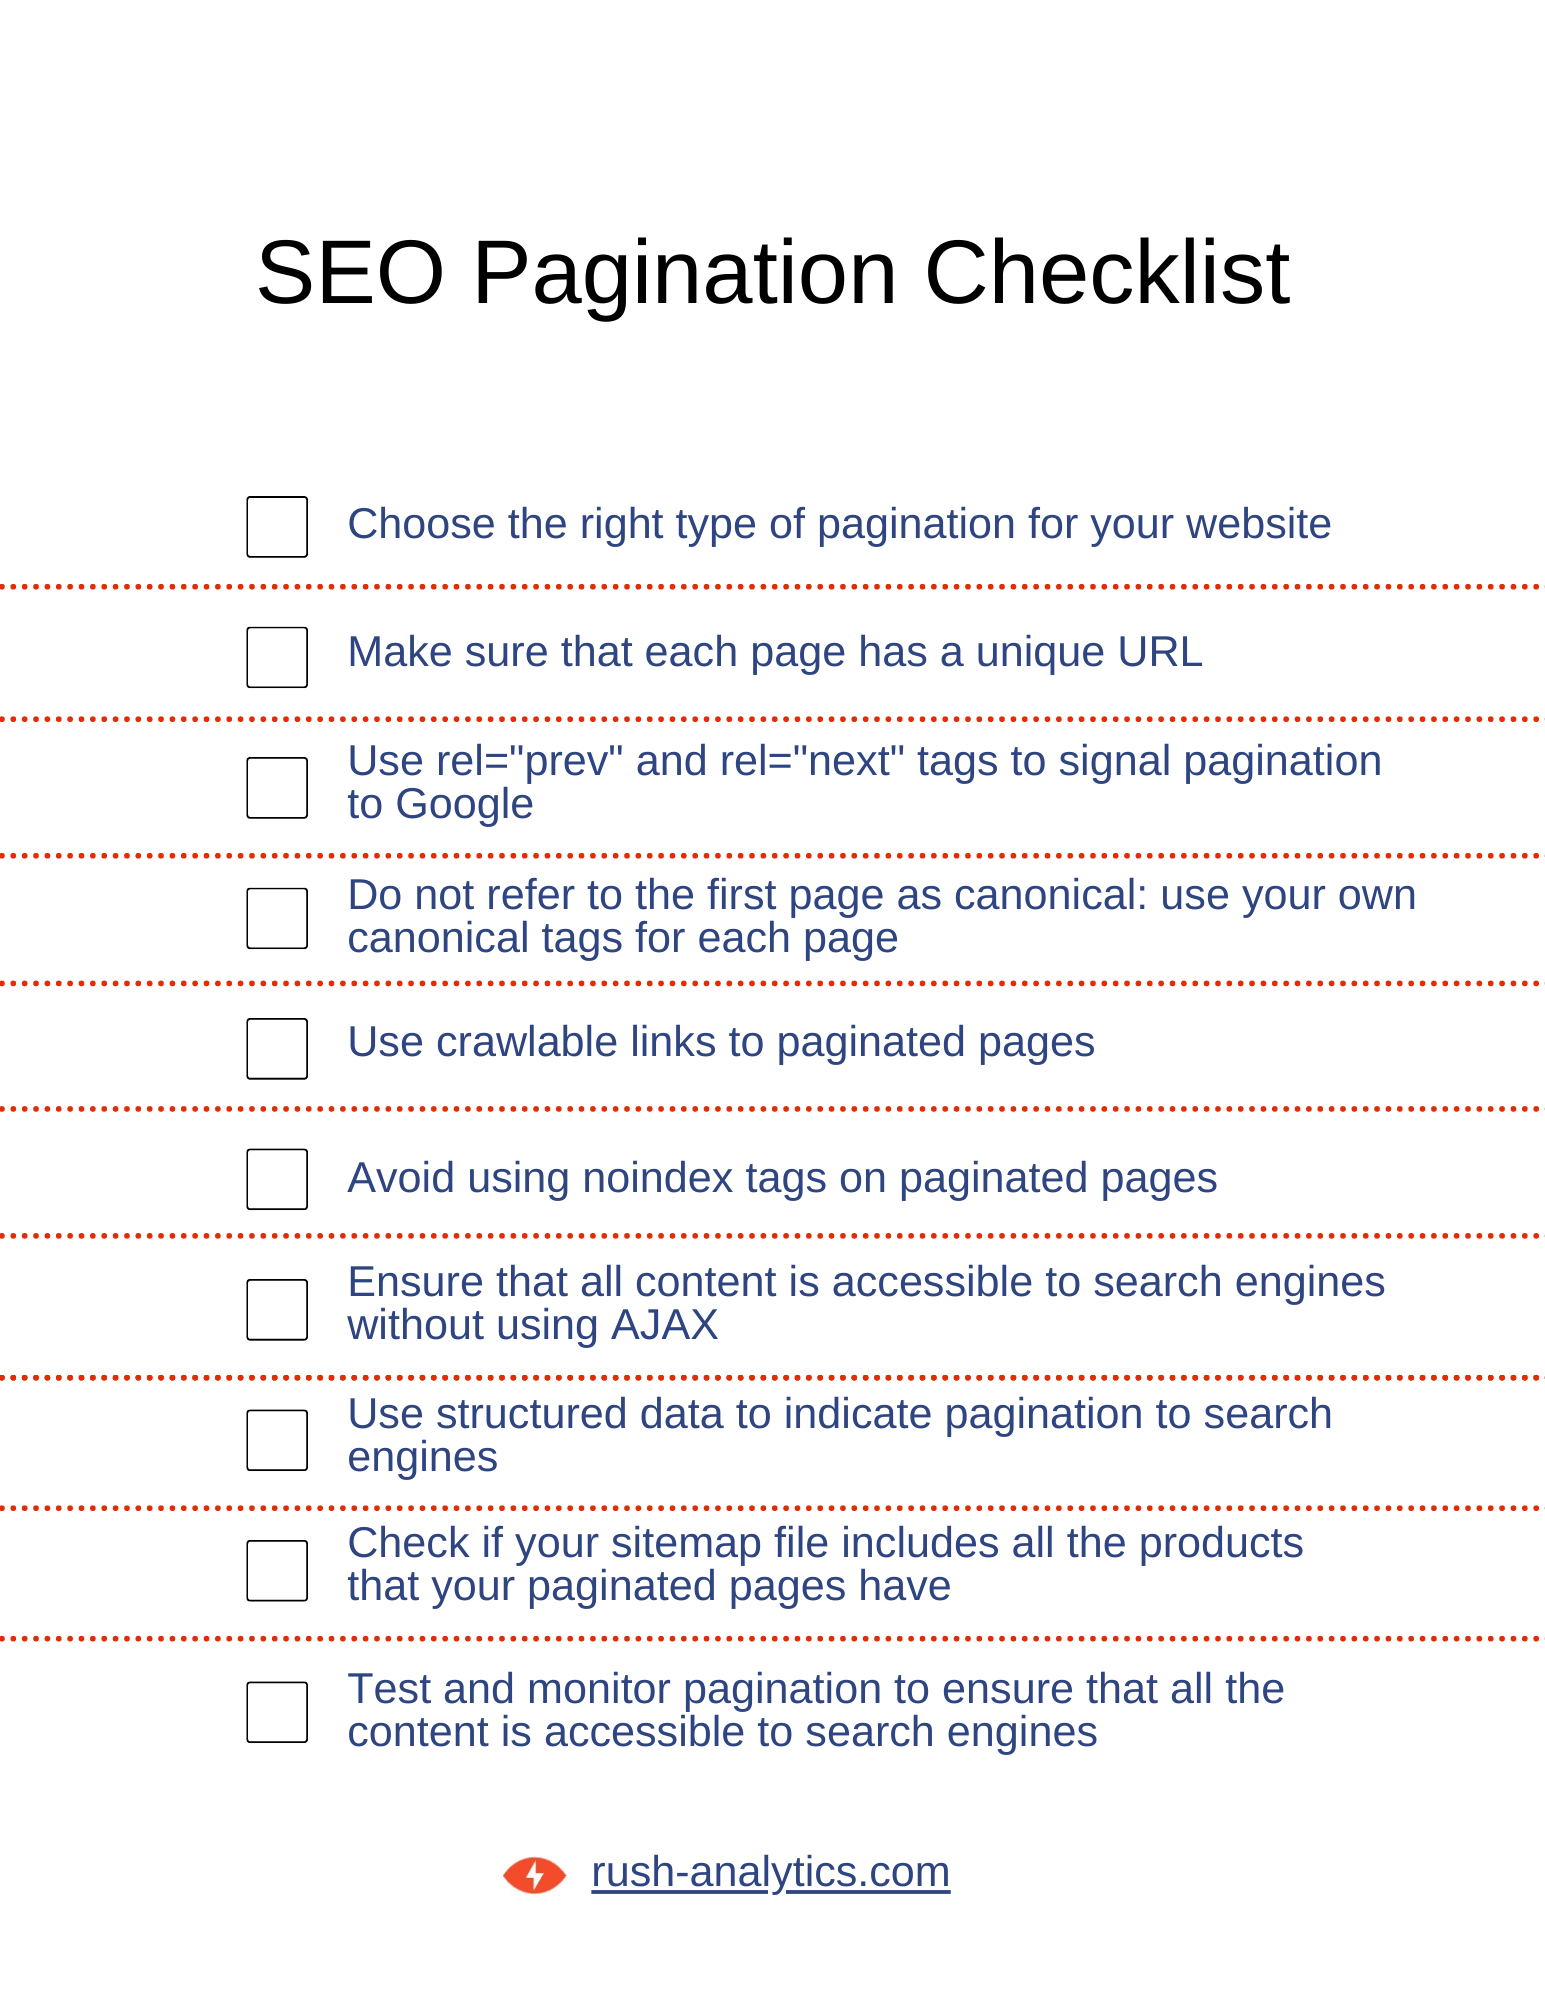 SEO pagination checklist